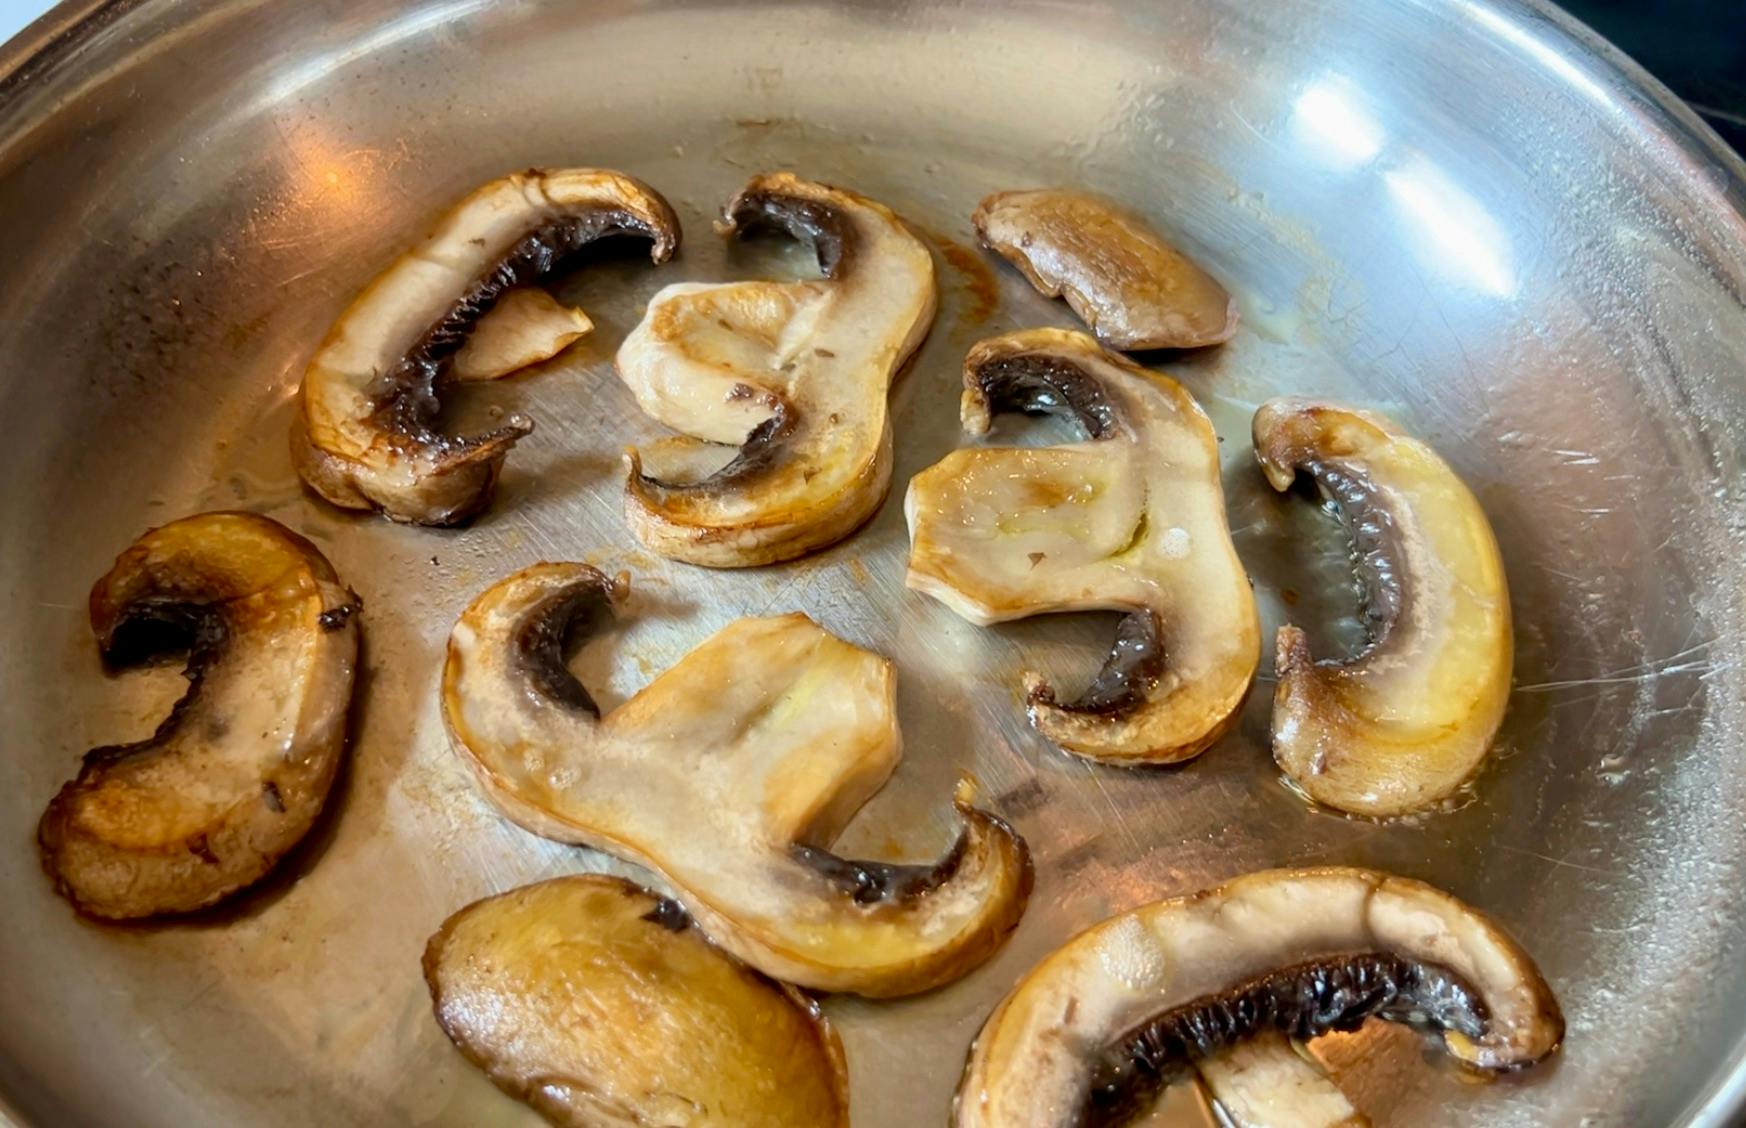 Golden brown mushrooms in a stainless steel pan